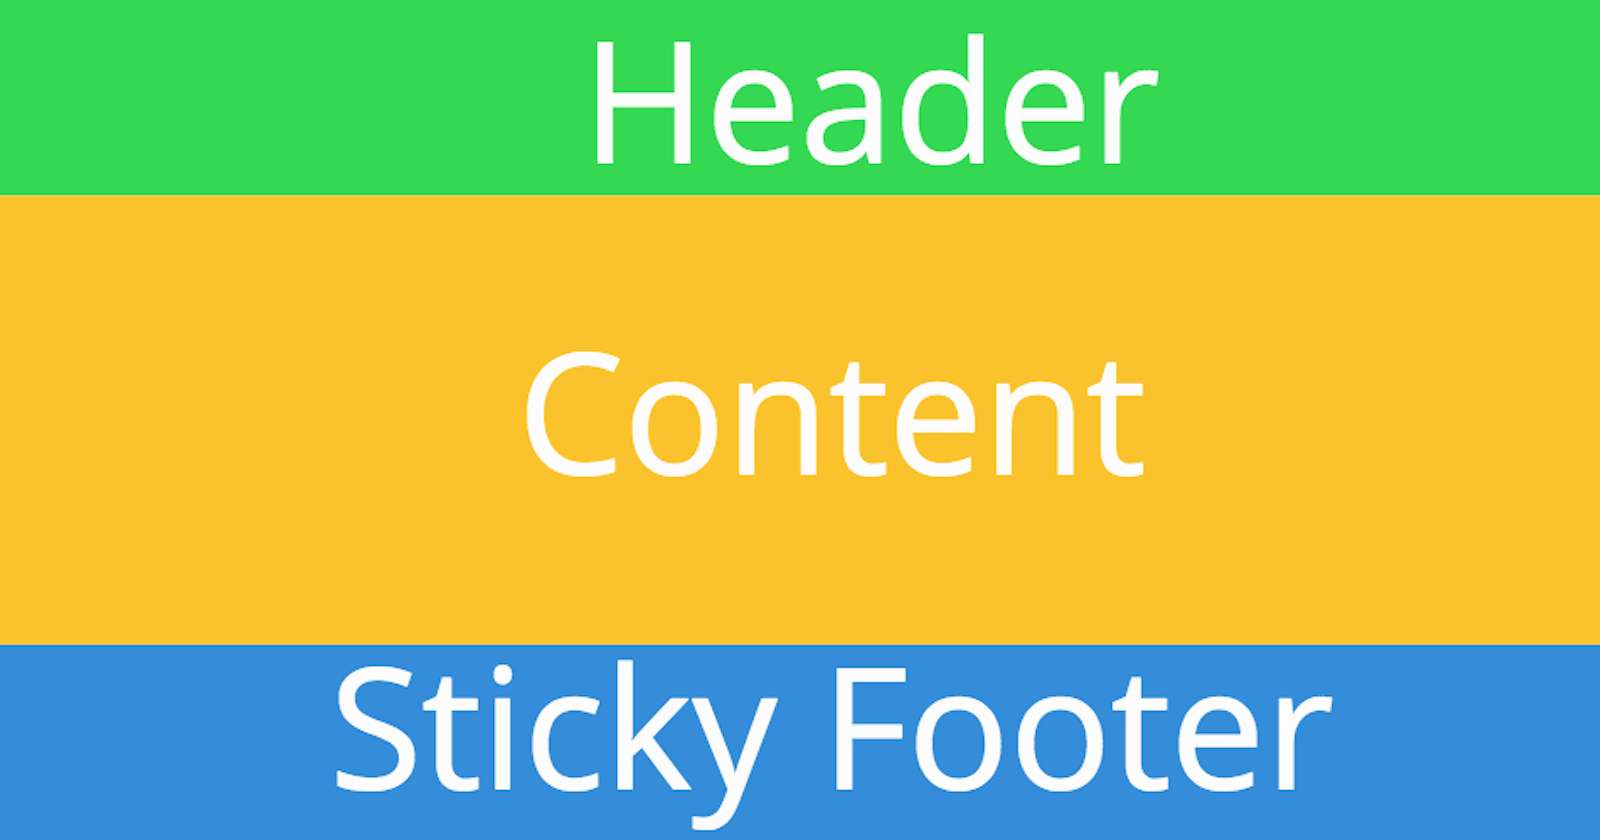 Sticky Footer in GatsbyJS using Flexbox